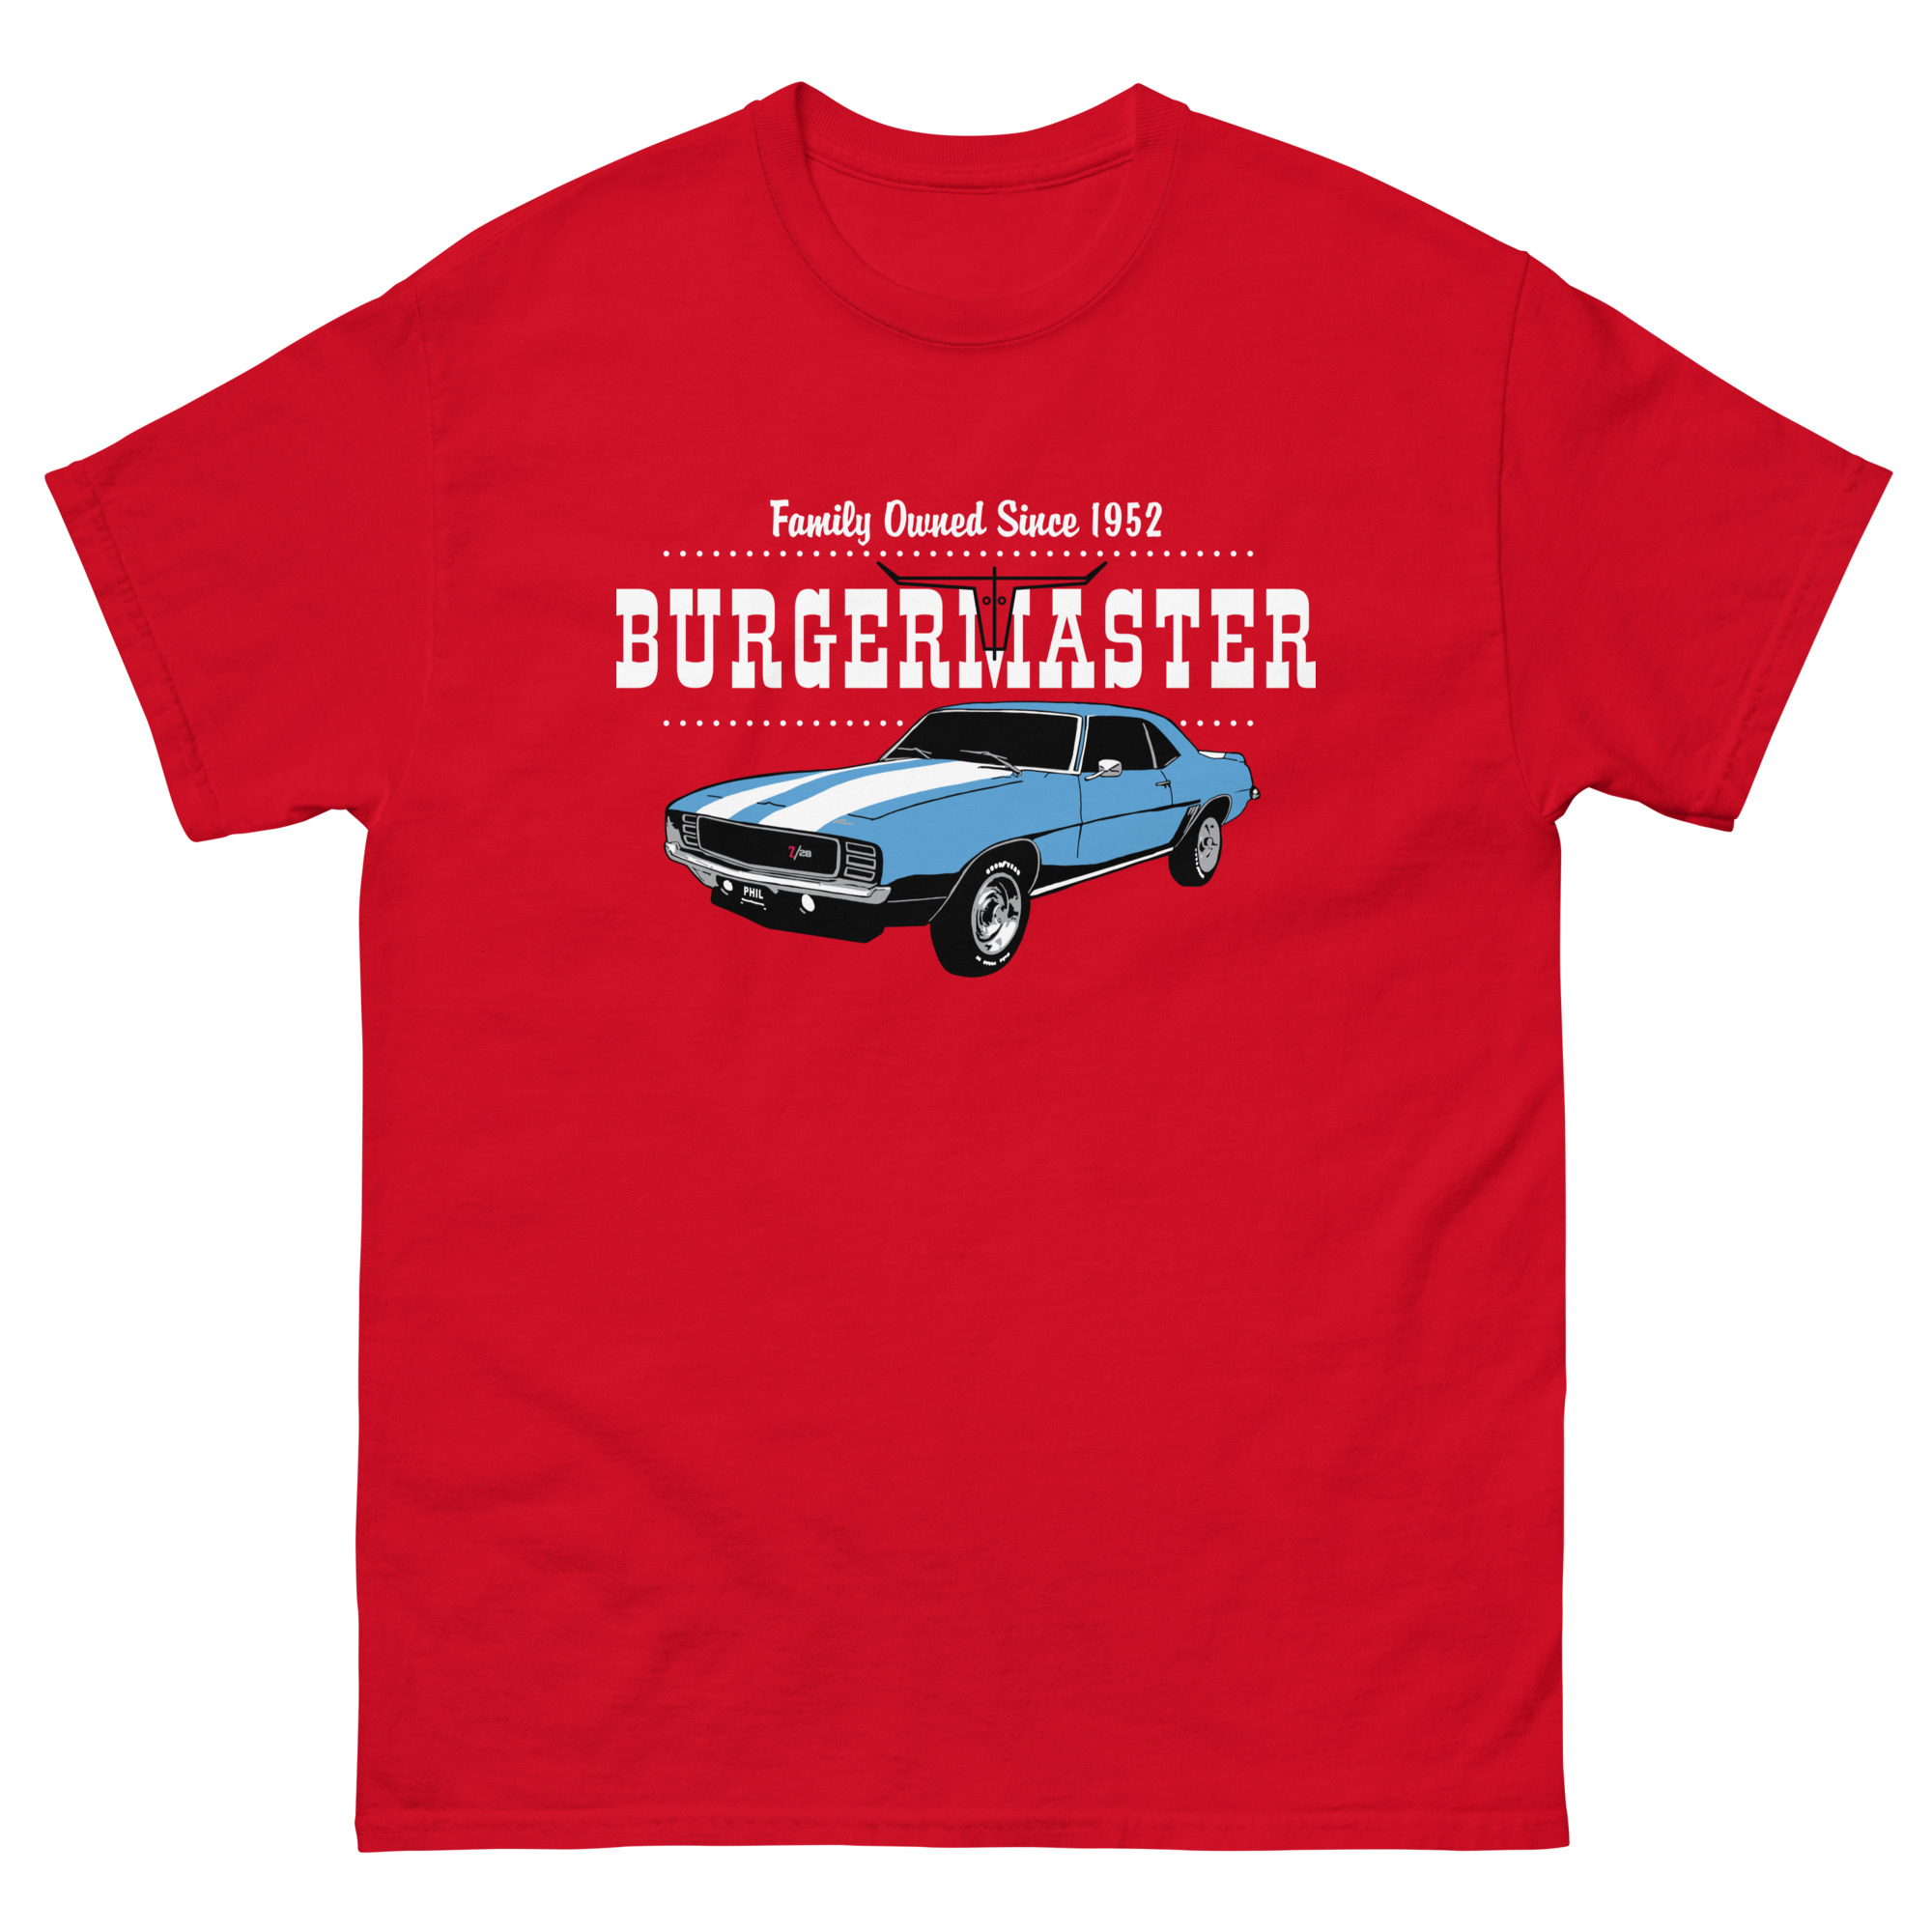 Burgermaster Vintage Carhop Shirt 2017